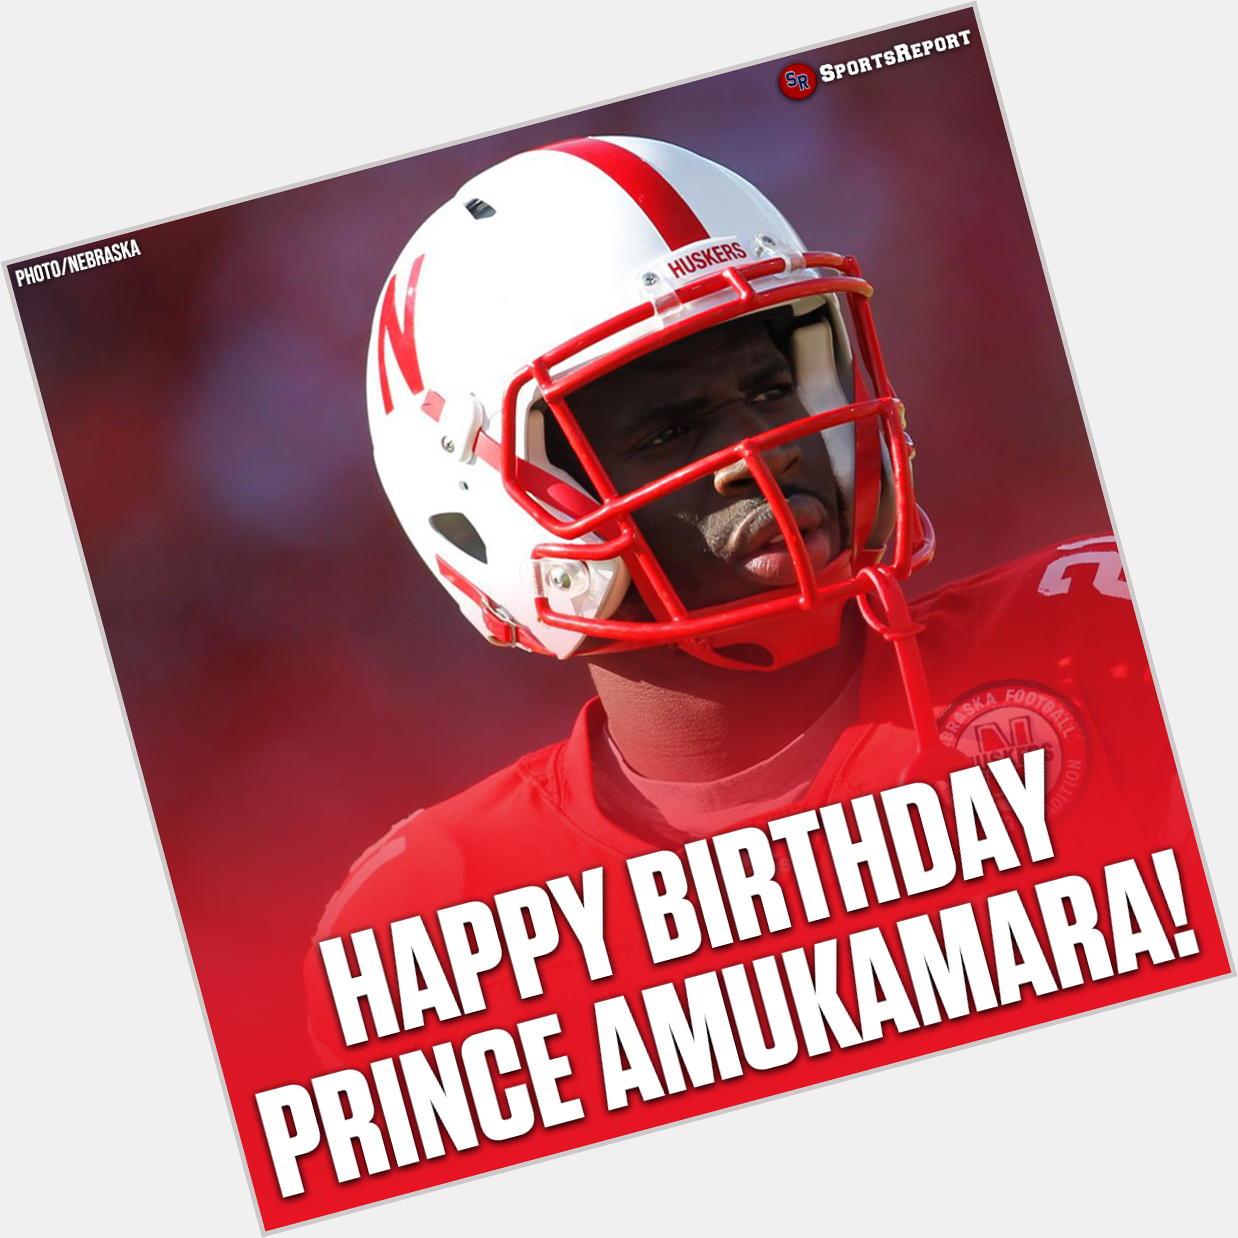  Fans, let\s wish great Prince Amukamara Happy Birthday! 